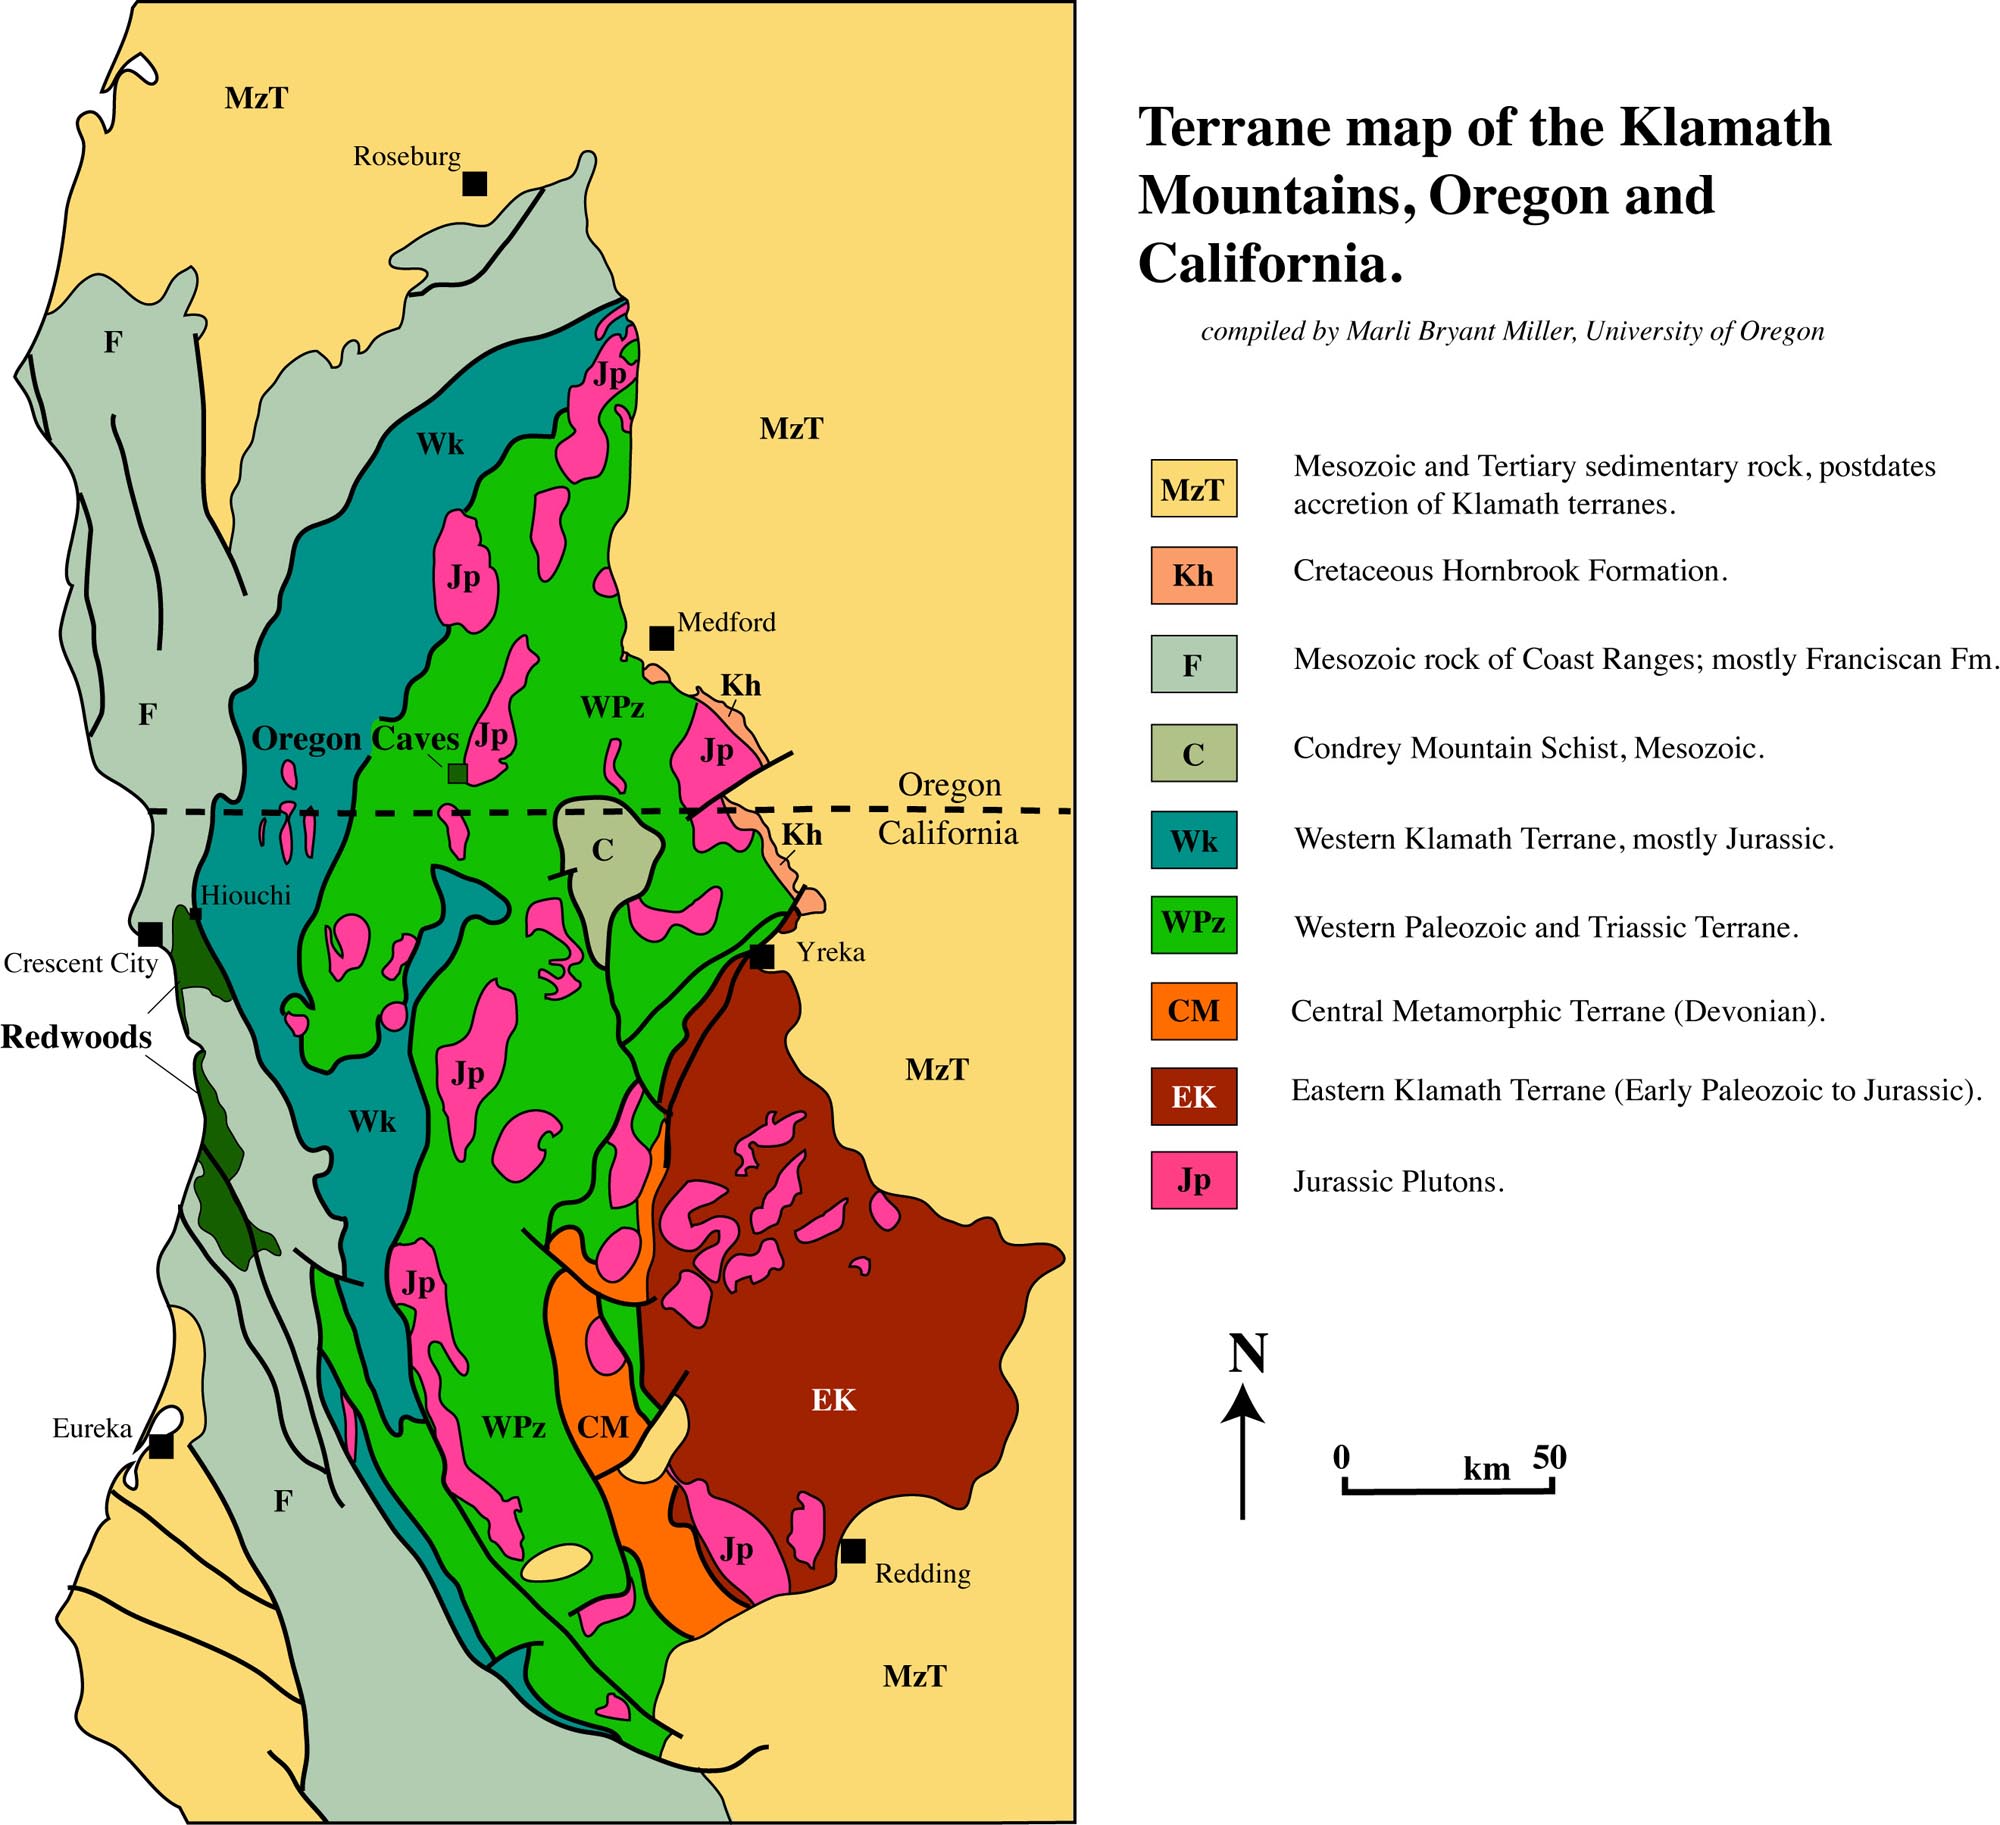 Tectonic map of Klamath Mountains